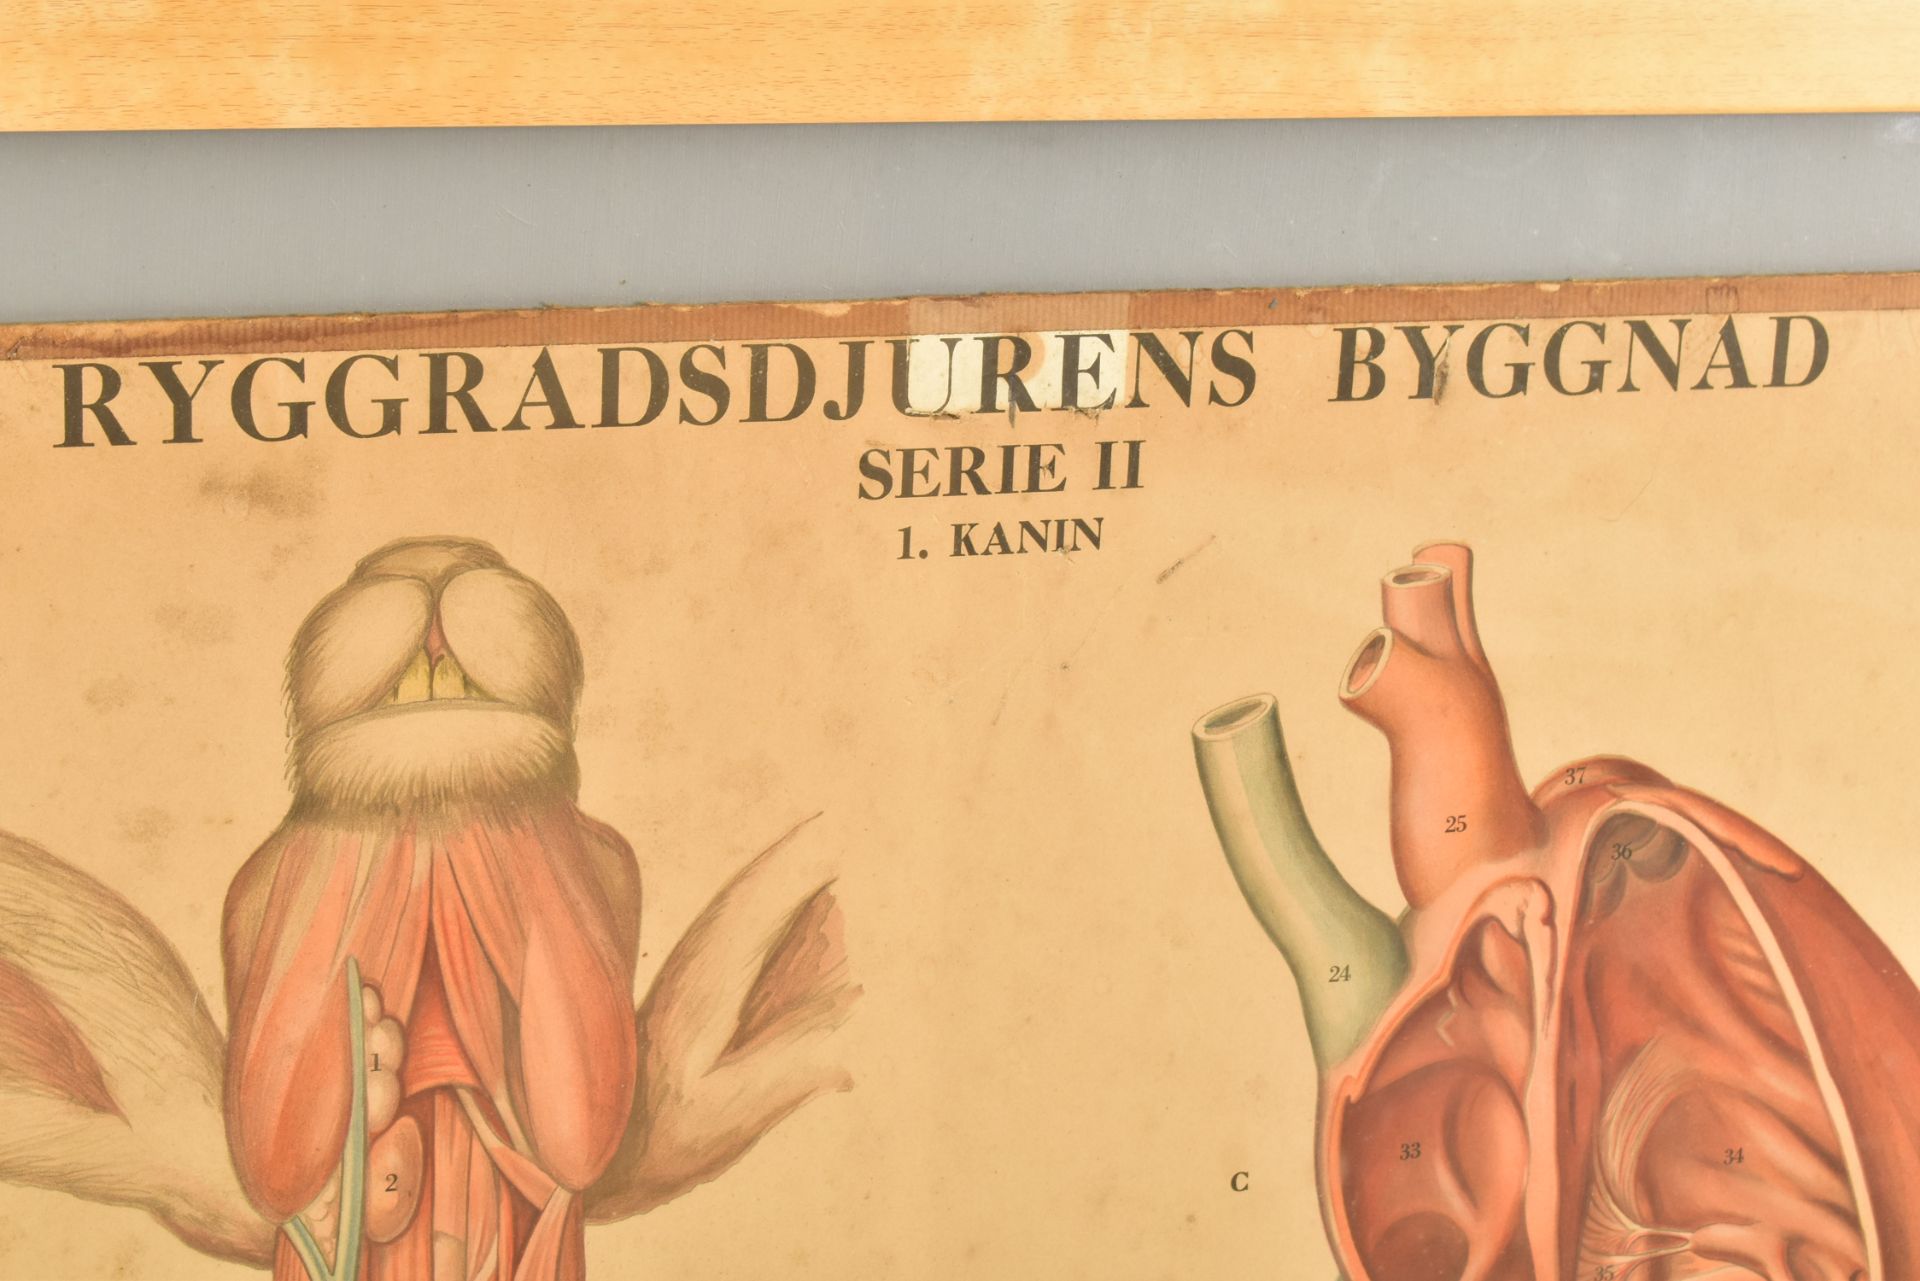 MID CENTURY SWEDISH ANATOMICAL EDUCATIONAL PRINT - Image 2 of 6